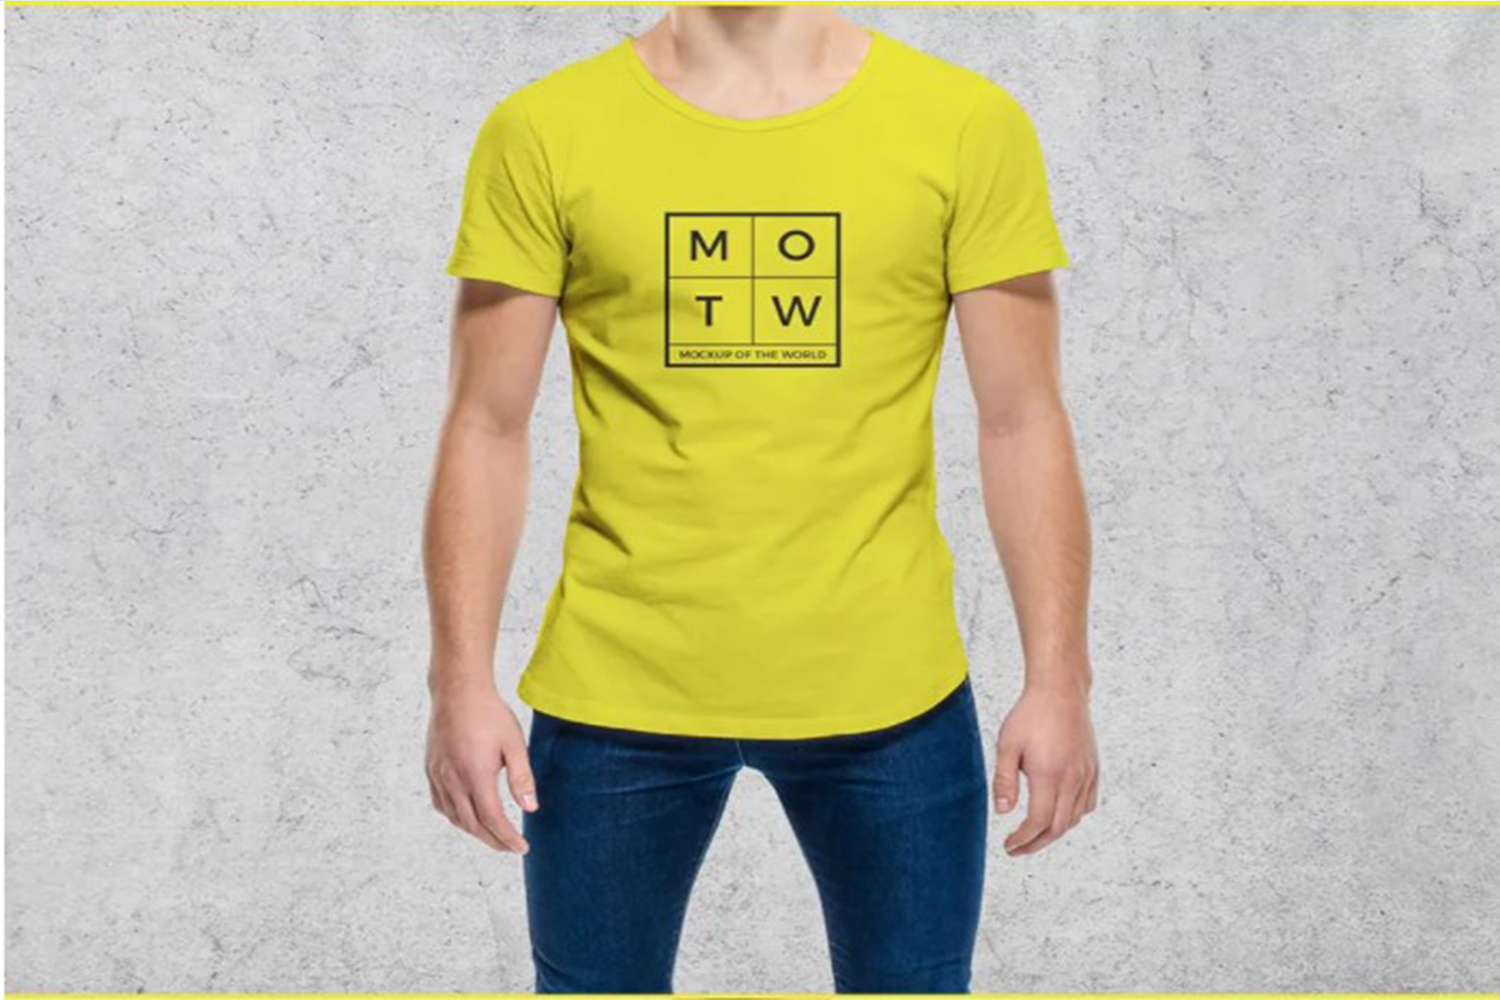 Round Neck T-Shirt Mockup Free Download